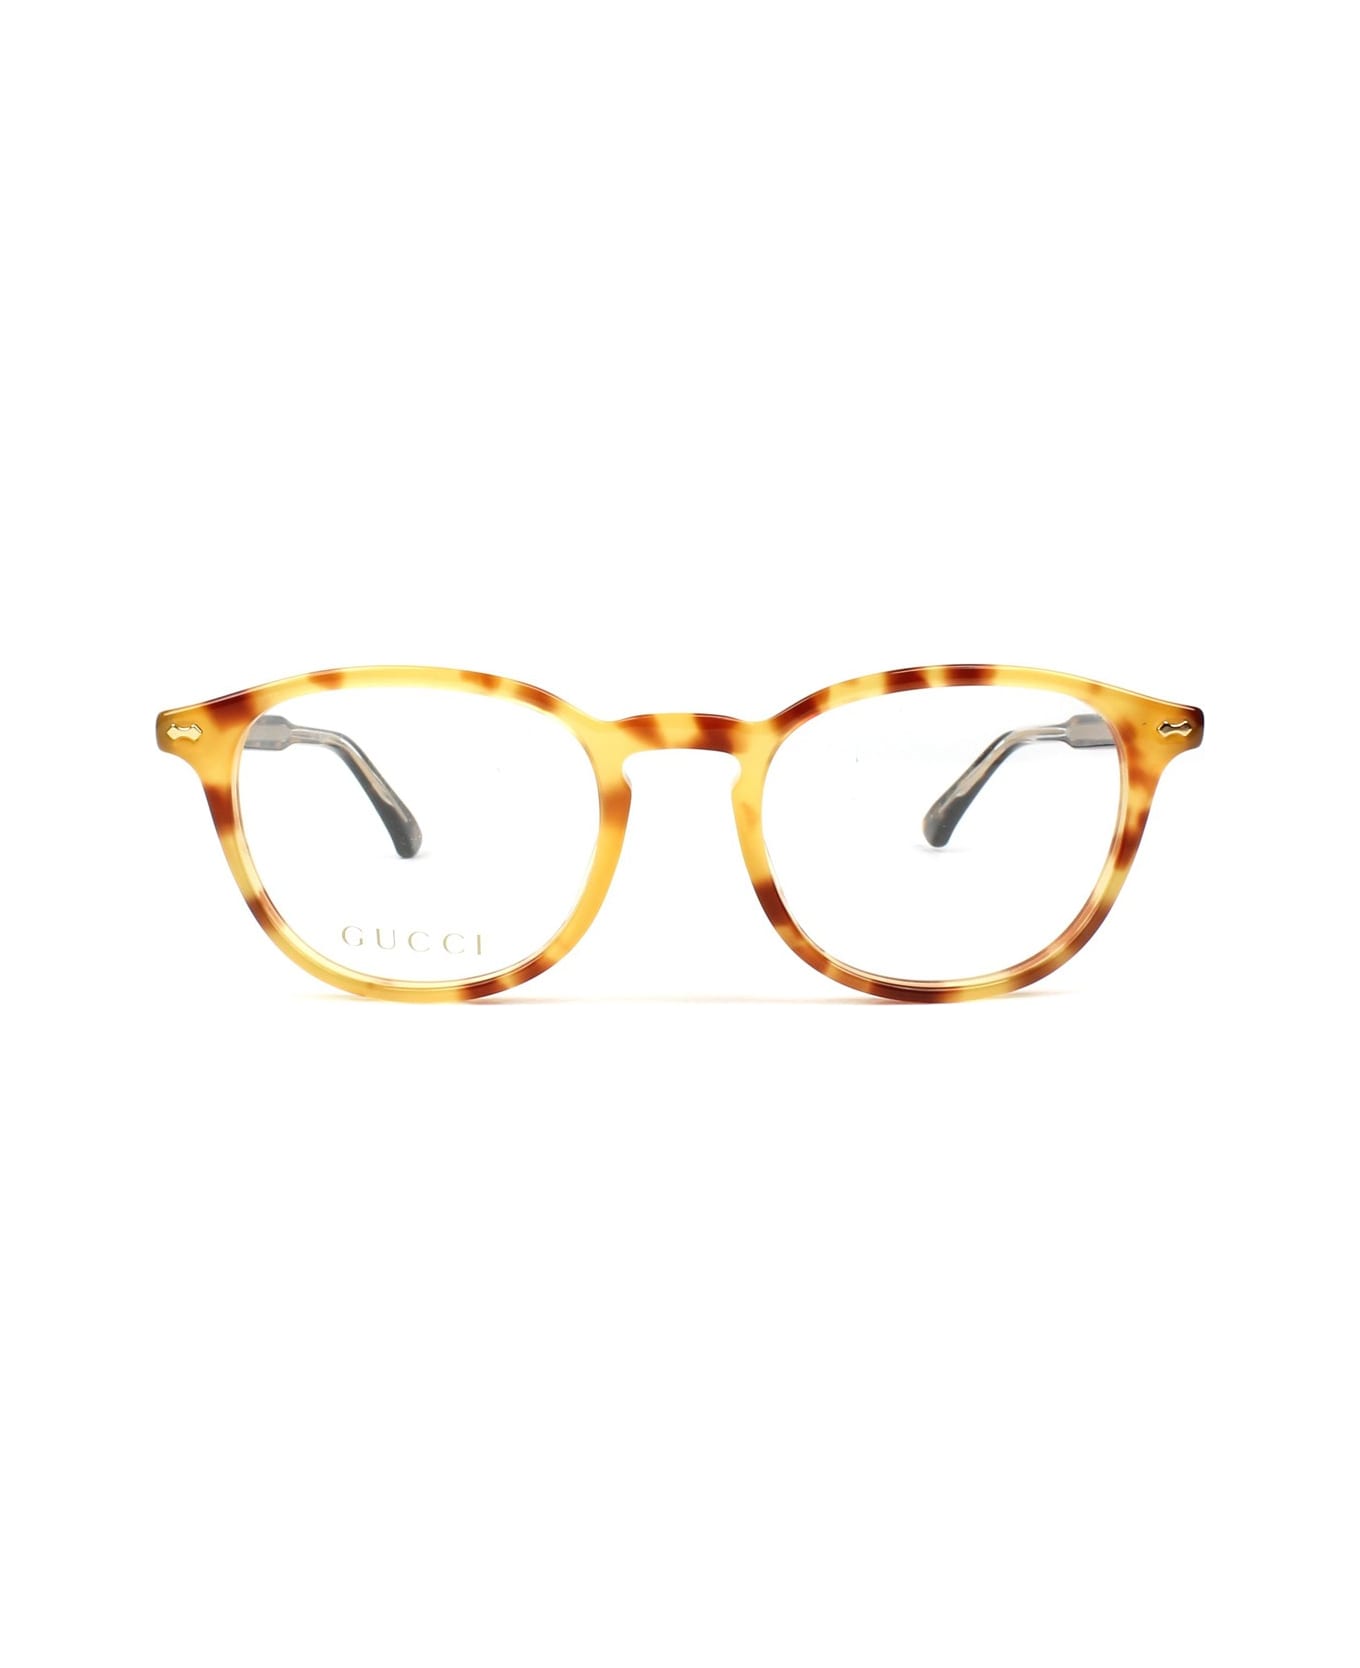 Gucci Eyewear Gg0187o Glasses - Beige アイウェア